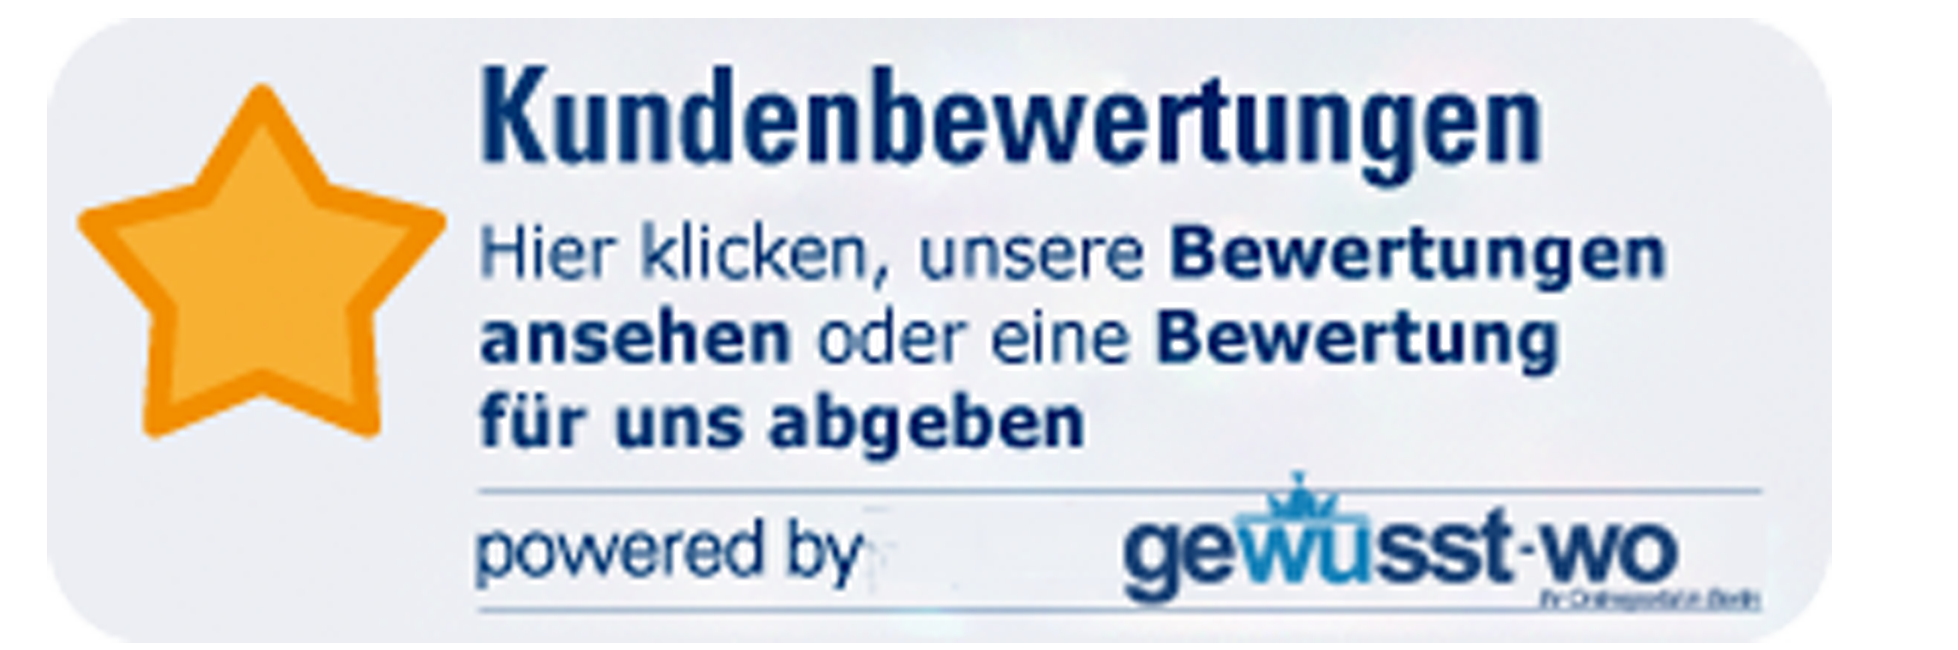 powered by gewusst-wo Berlin